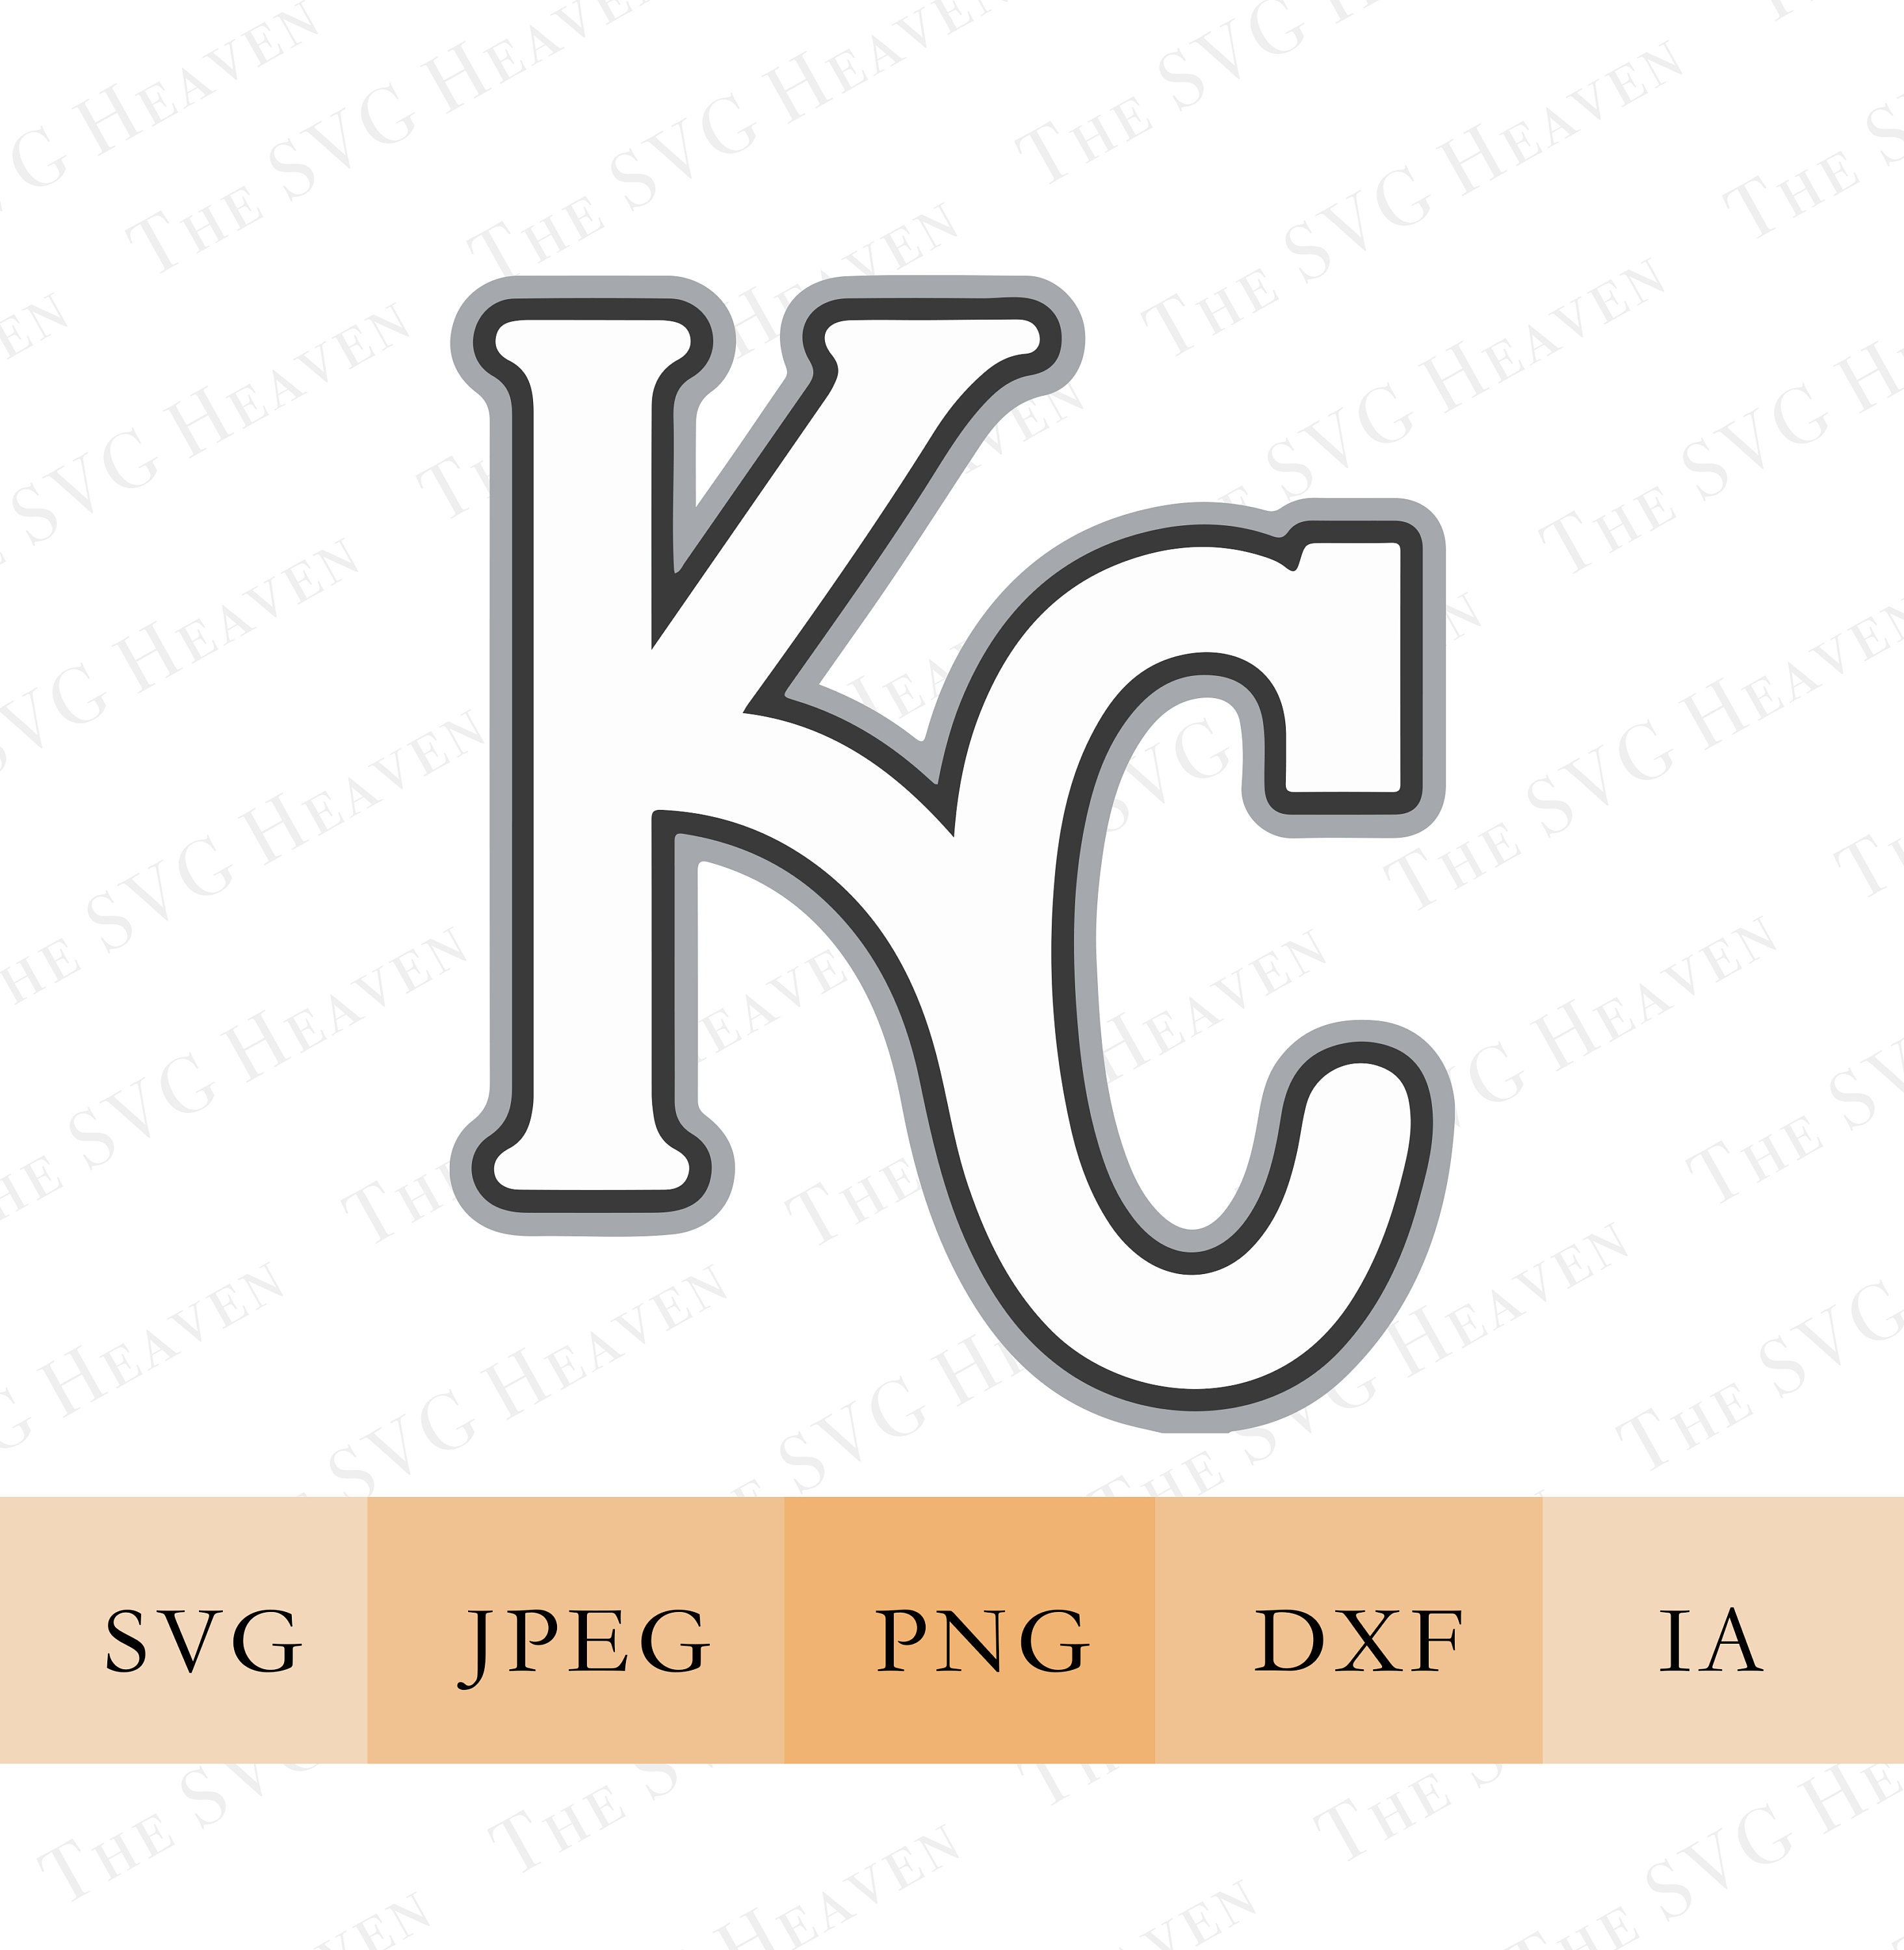 kc chiefs svg - Google Search  Kansas city chiefs logo, Kansas